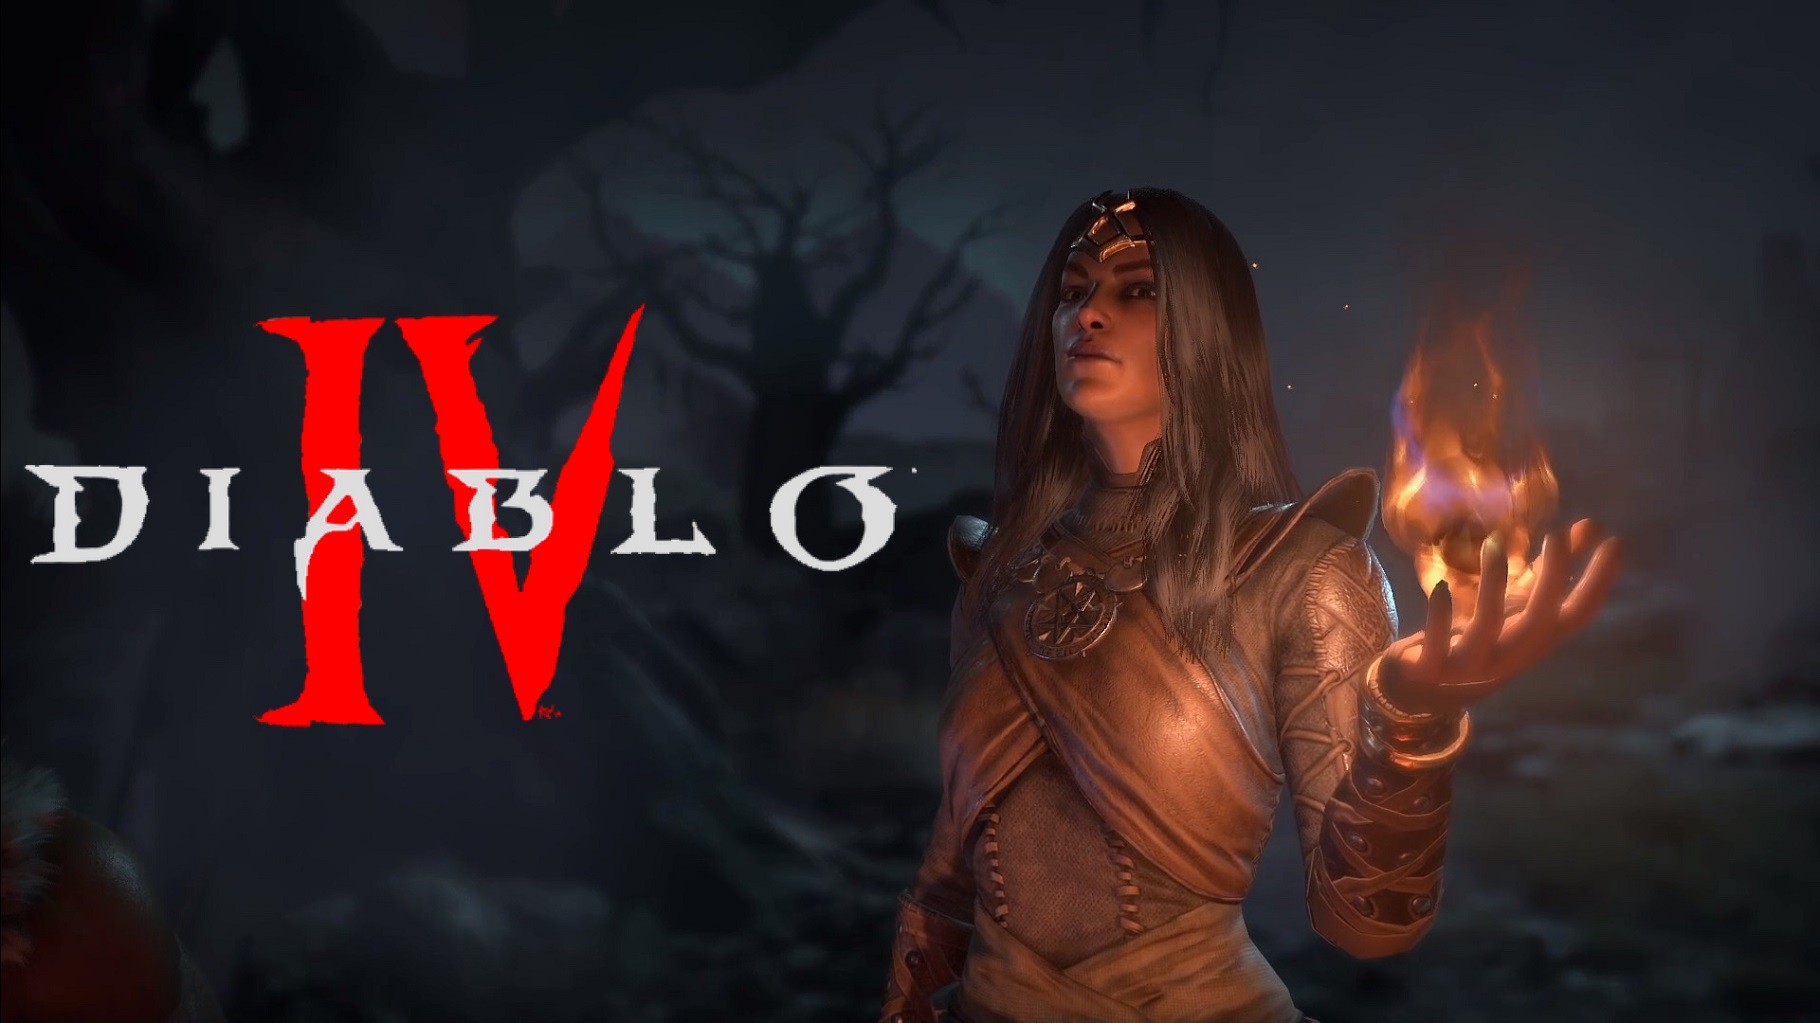 download the new Diablo 4